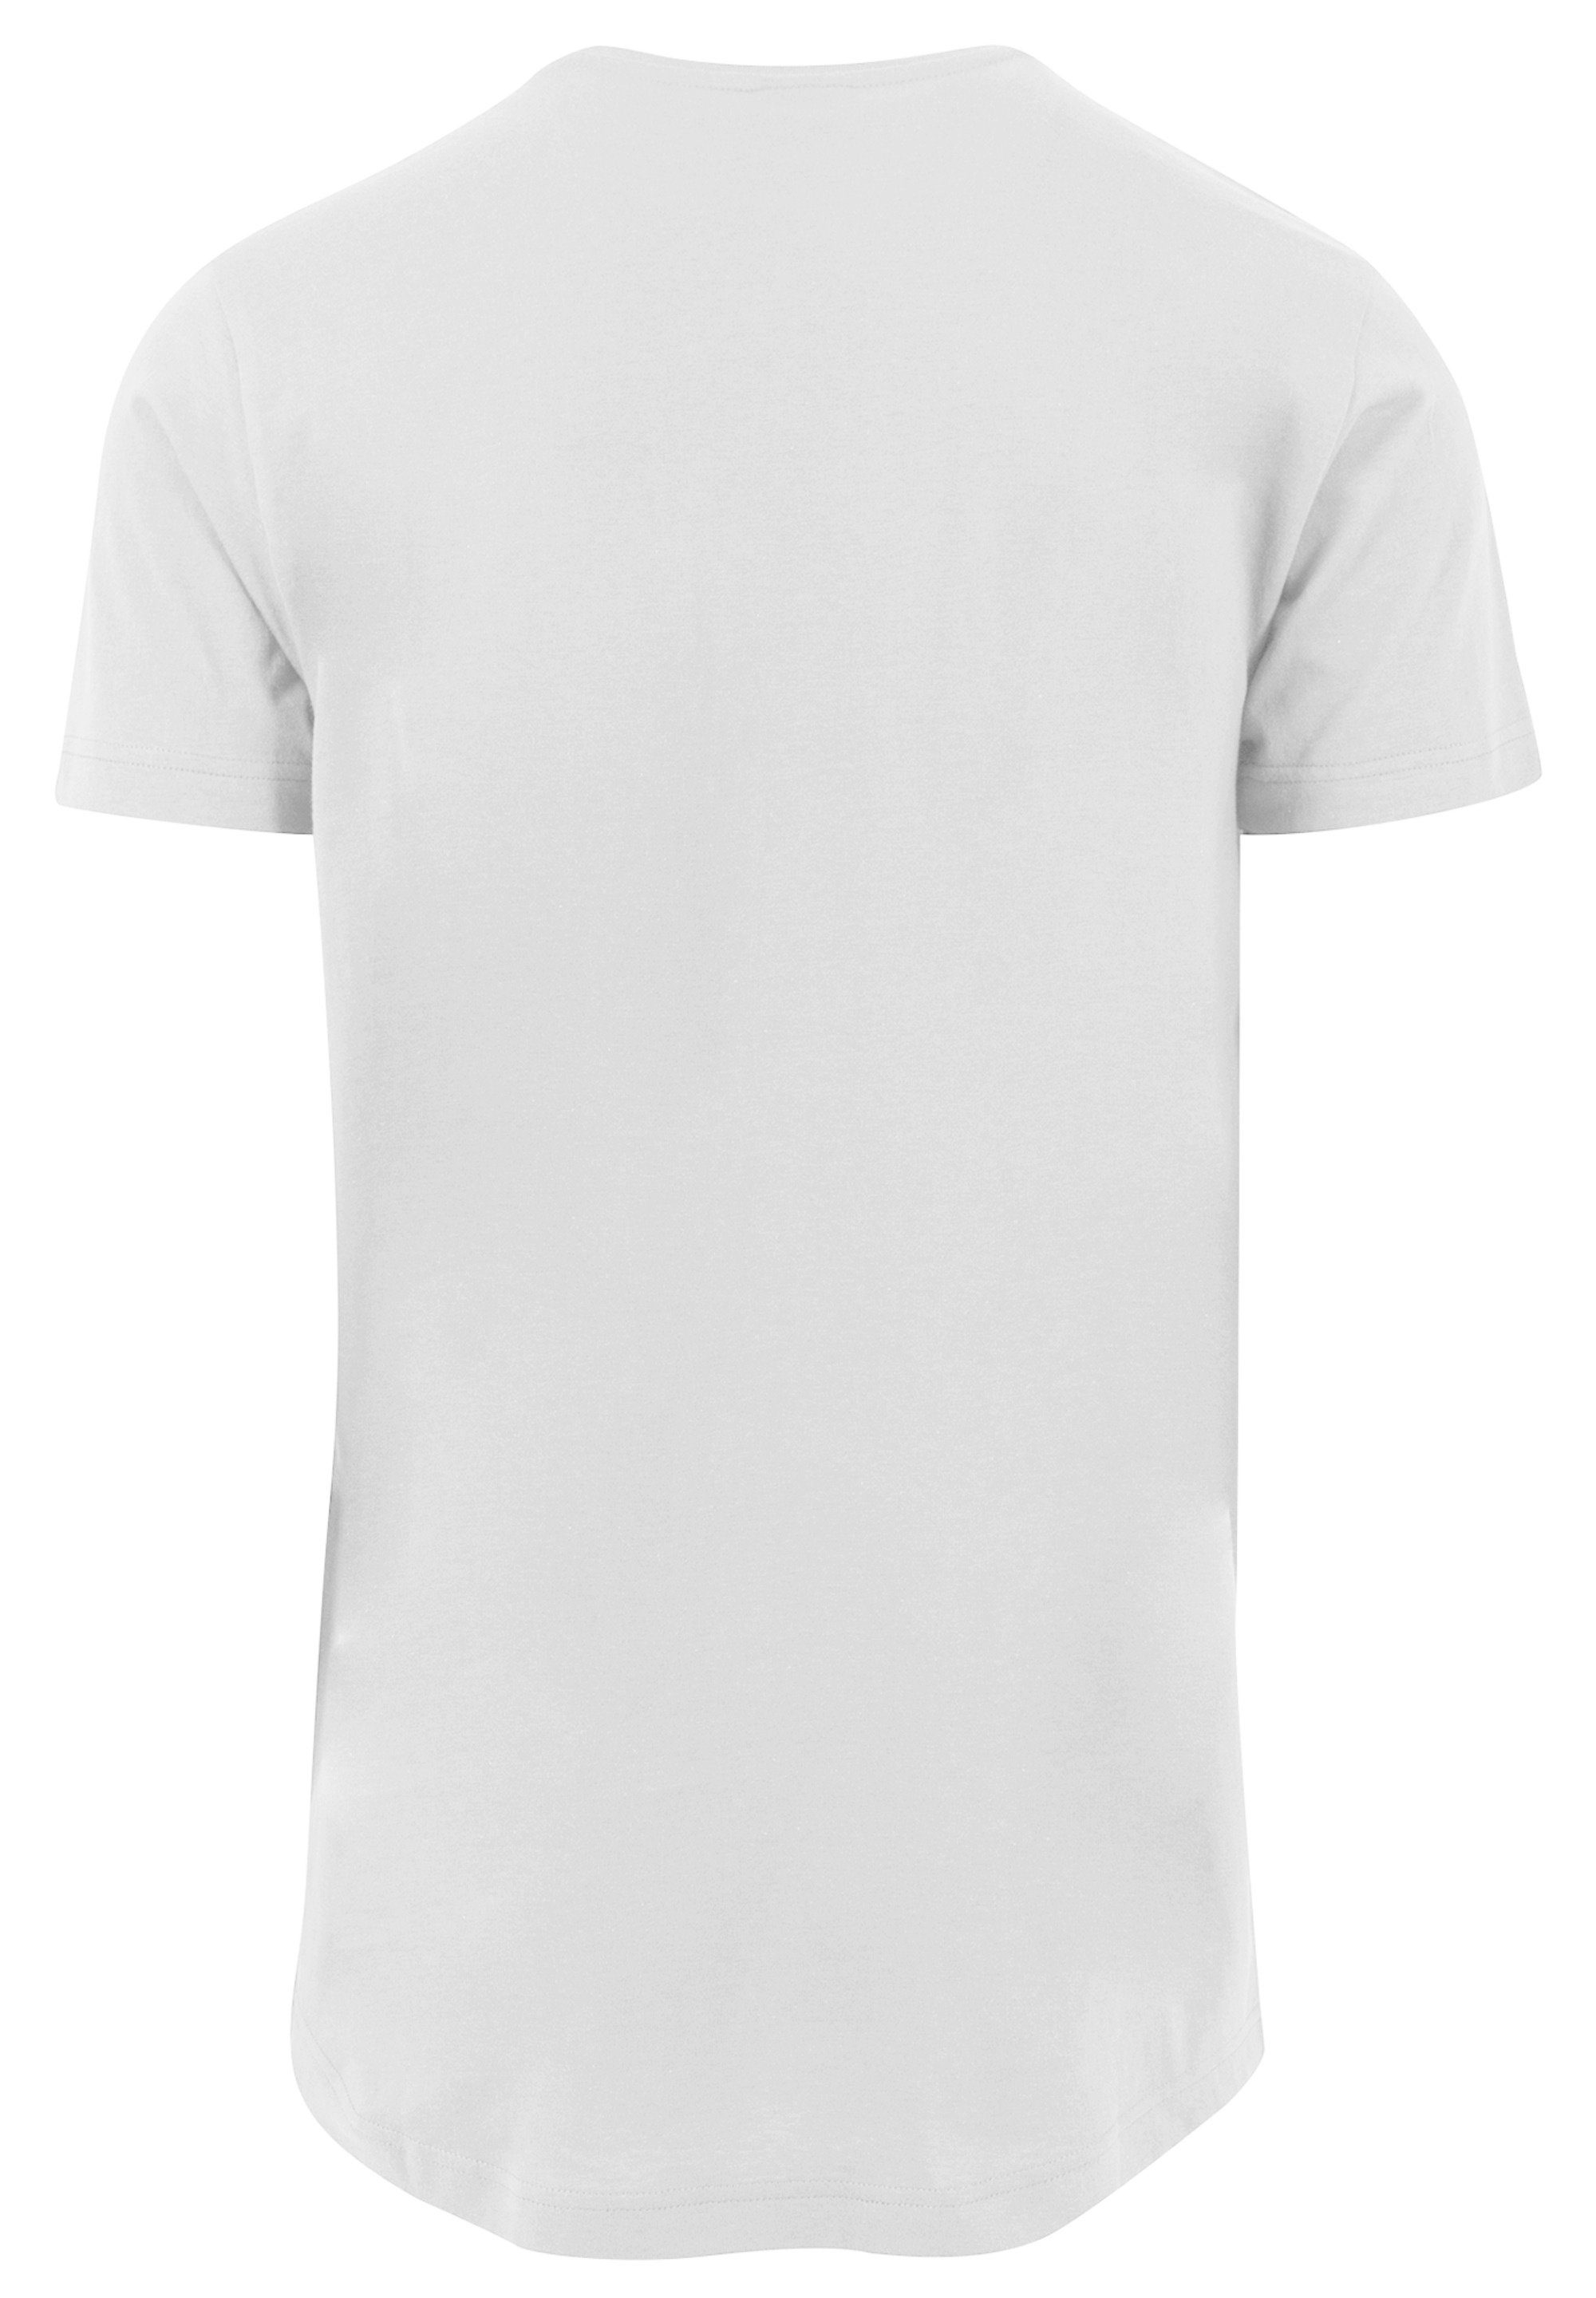 Insignia T-Shirt Chest F4NT4STIC Classic Herren,Premium NASA White Logo Merch,Lang,Longshirt,Bedruckt